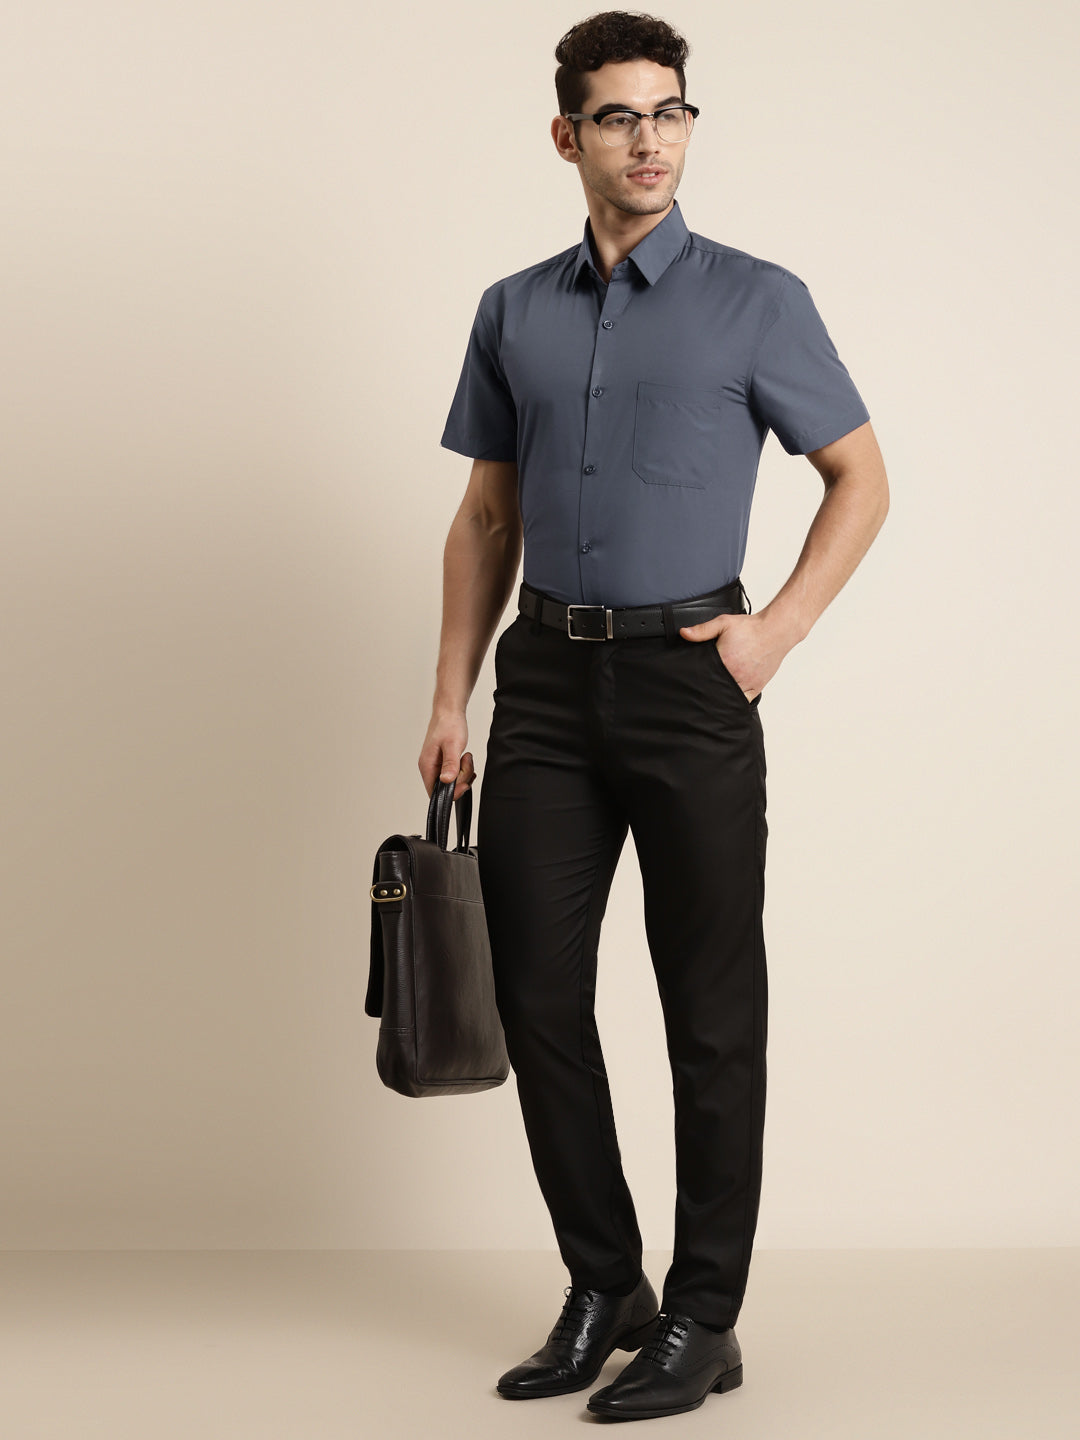 Men's Cotton Charcoal Grey Half sleeves Casual Shirt